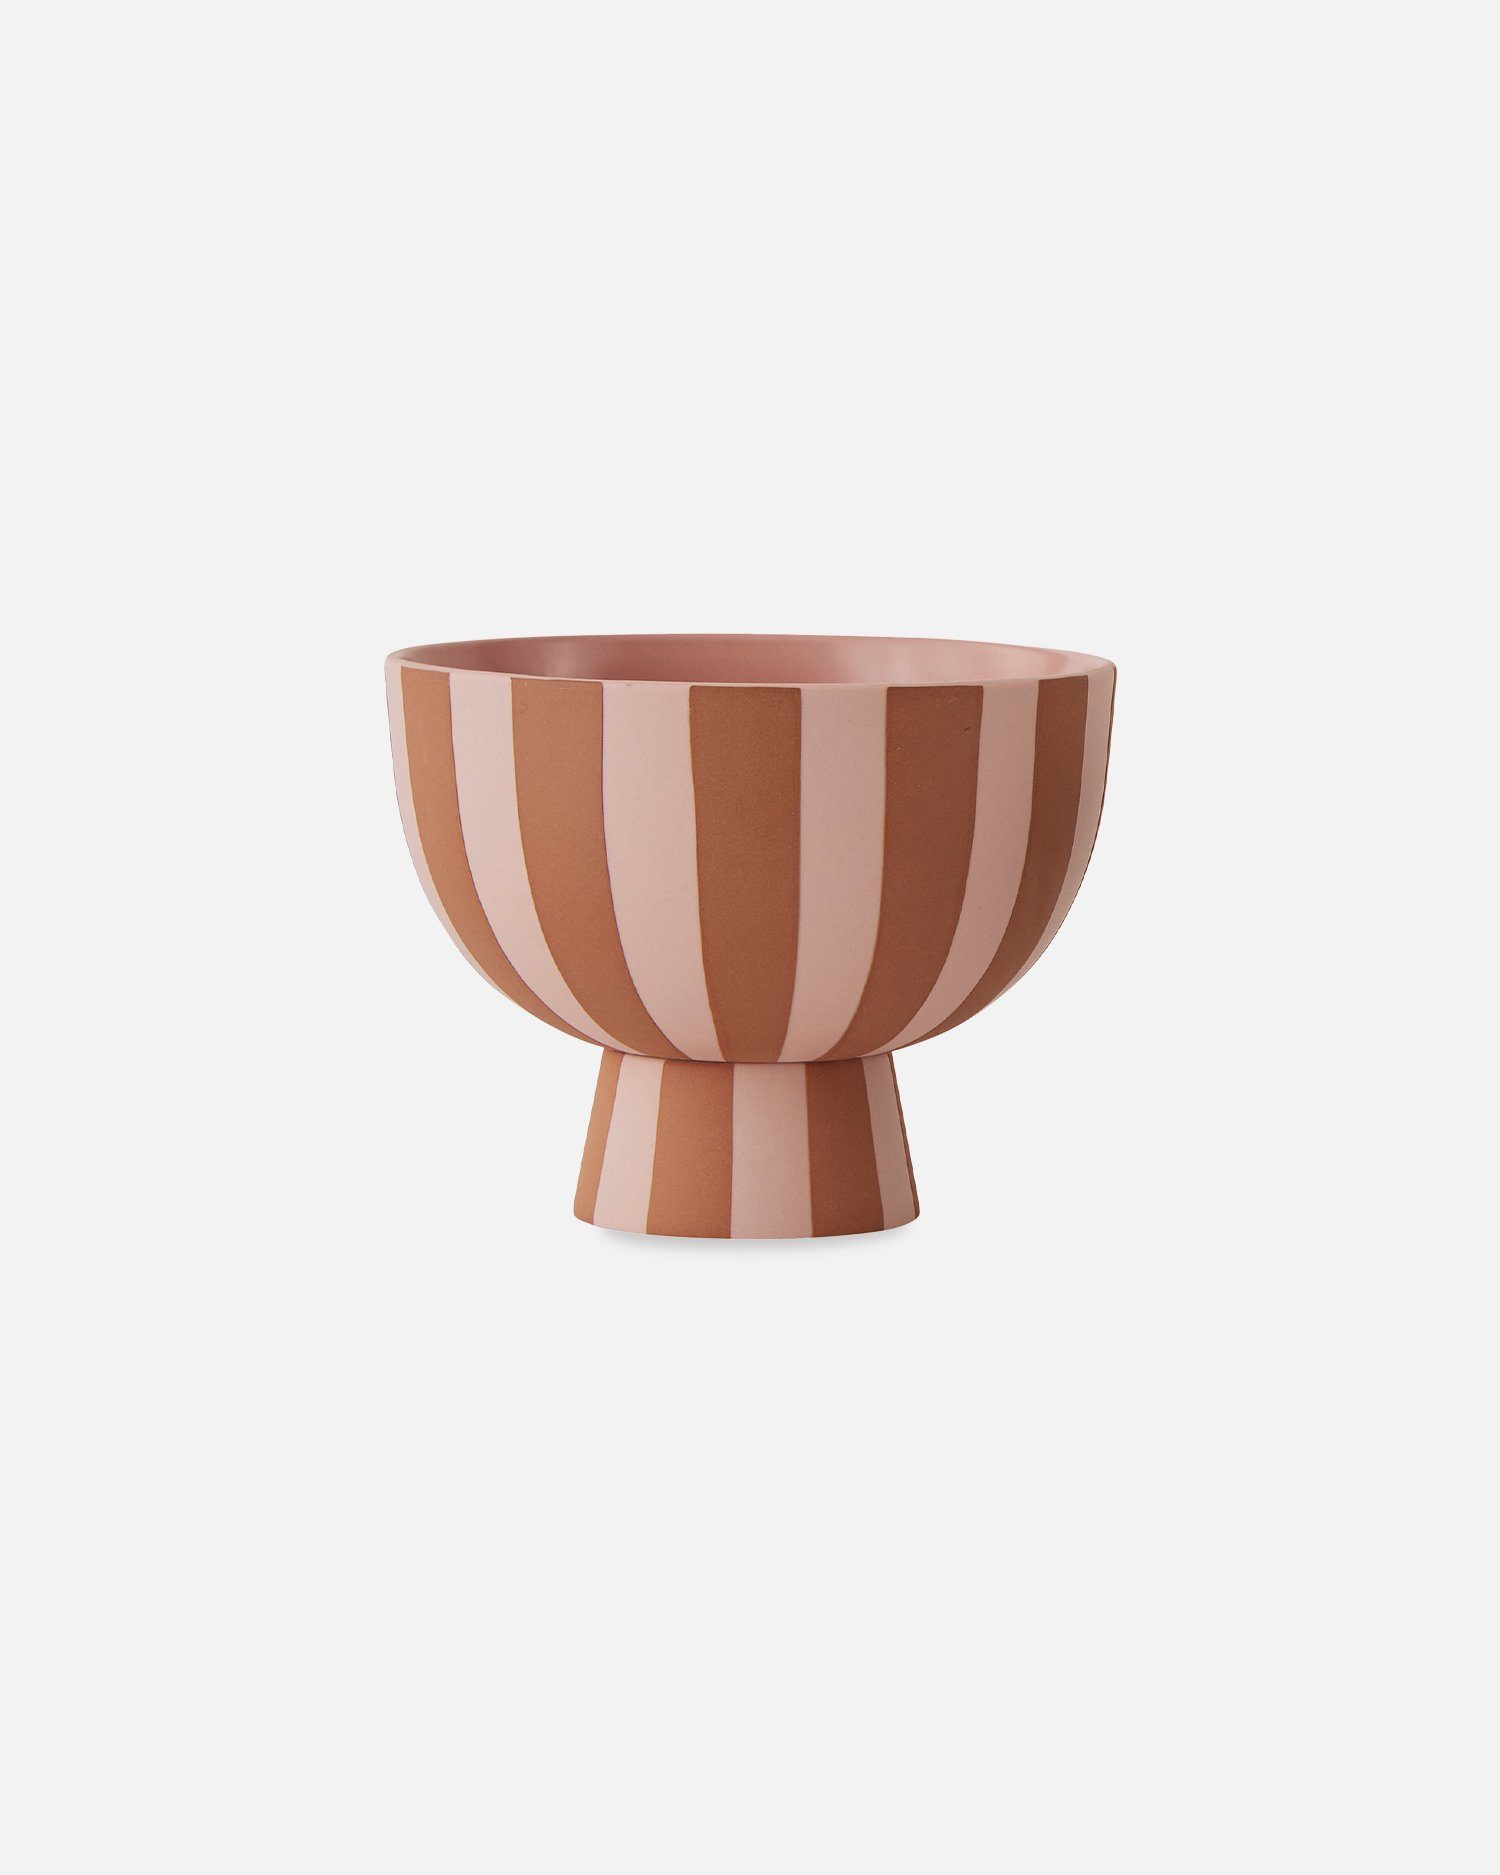 OYOY Dekoschüssel Toppu Keramik Ø12 Mini Bowl x aus Gestreift Karamell/Rosa Dekoschale H10cm, 